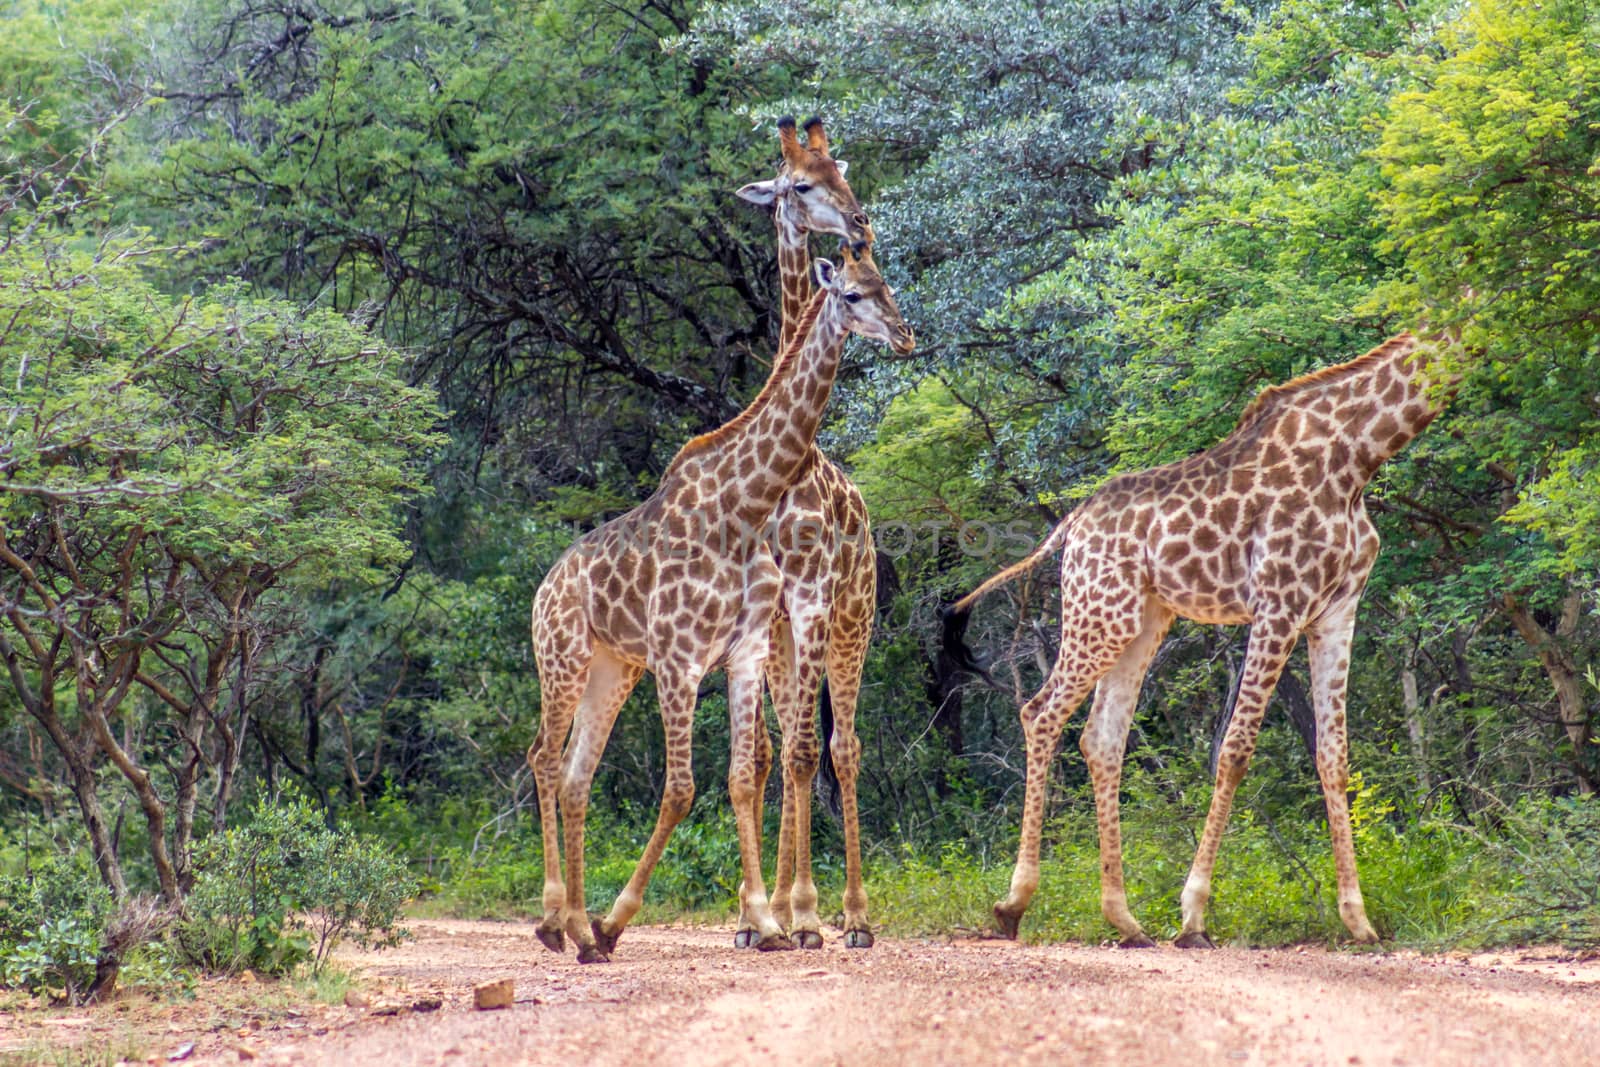 southern giraffe (Giraffa giraffa) by RiaanAlbrecht